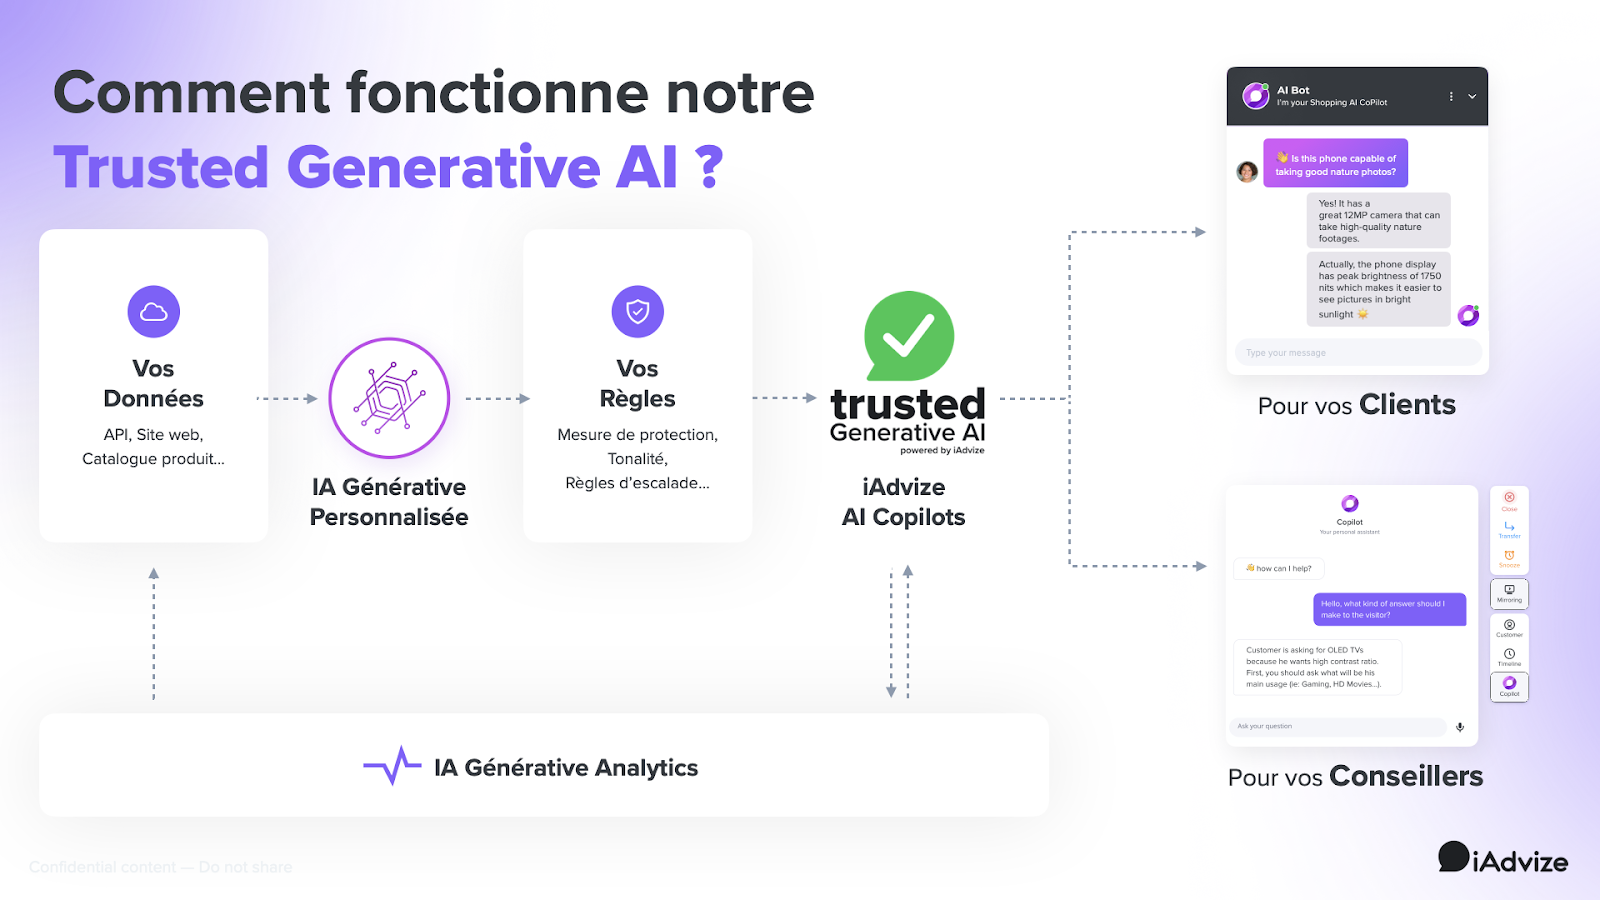 Trusted Generative AI